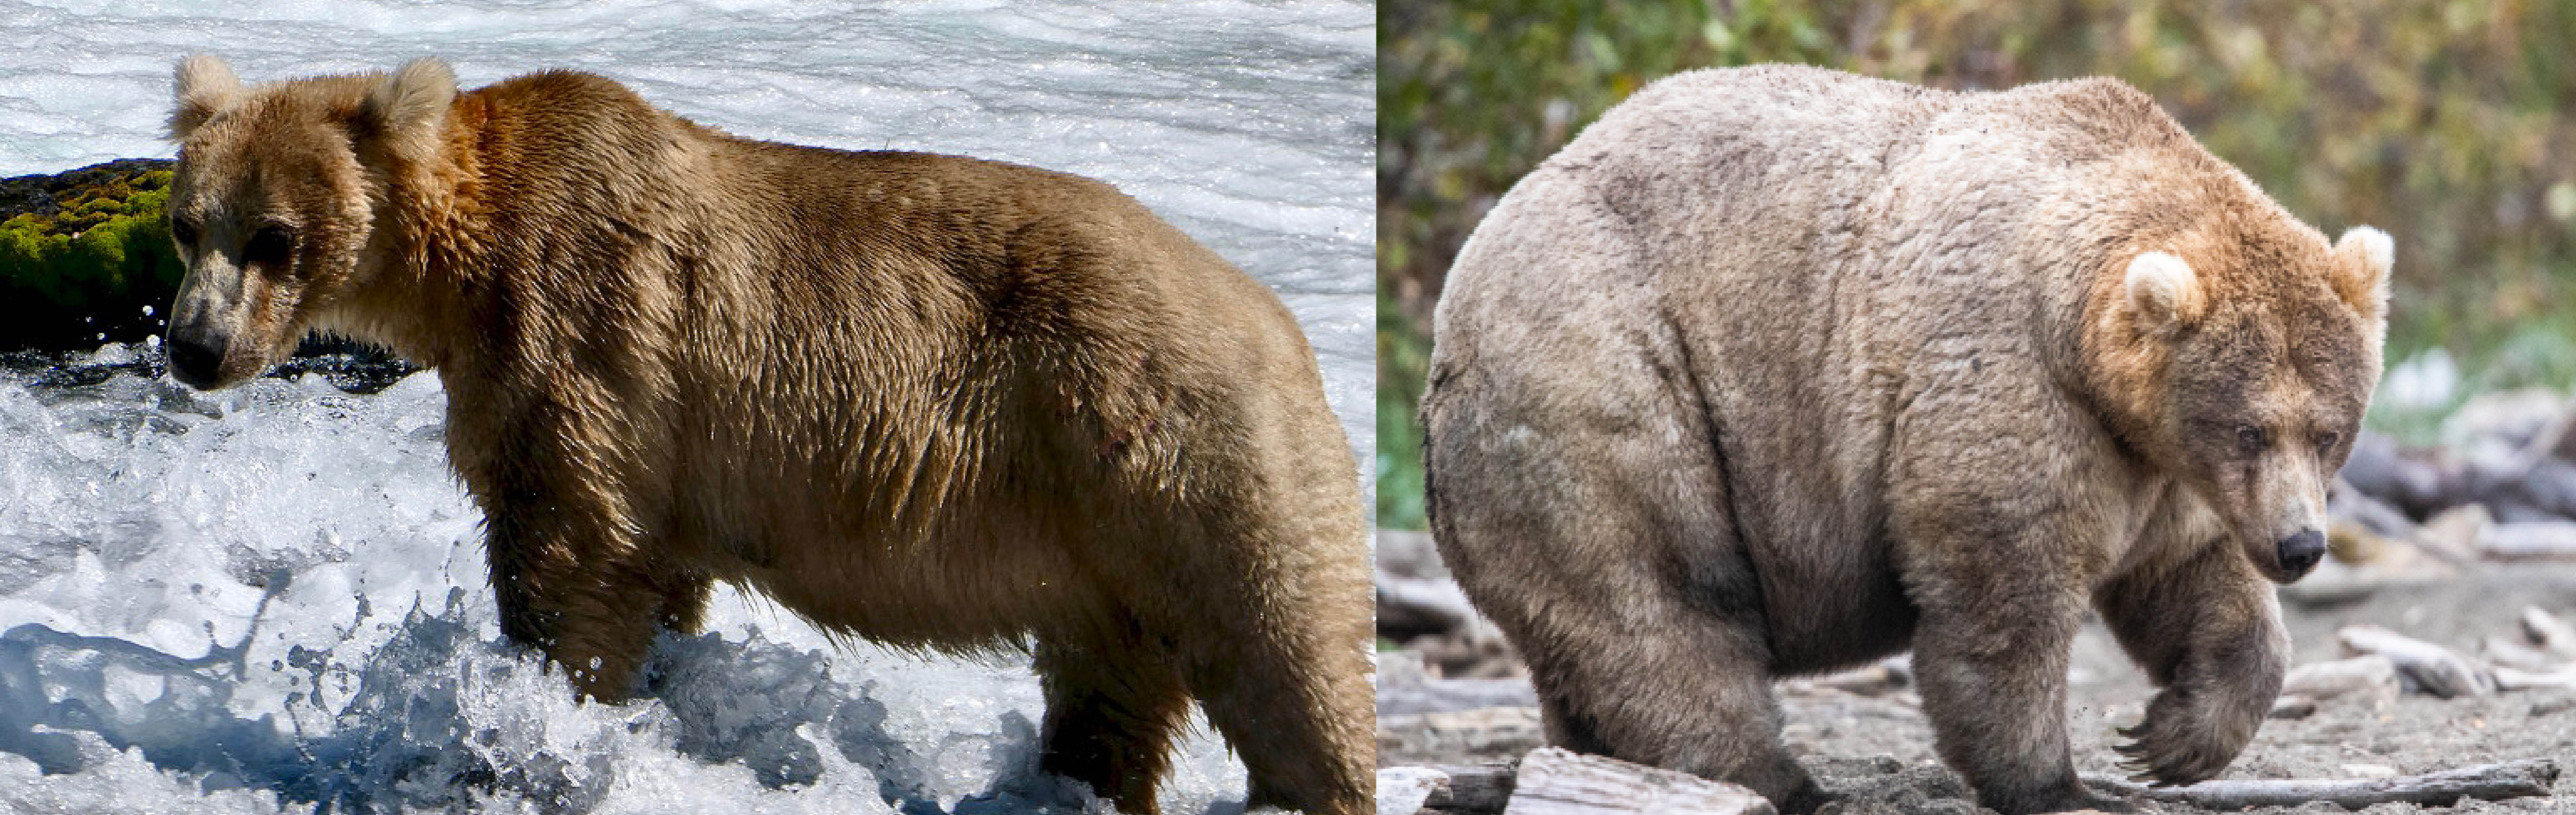 fat stuffed bear